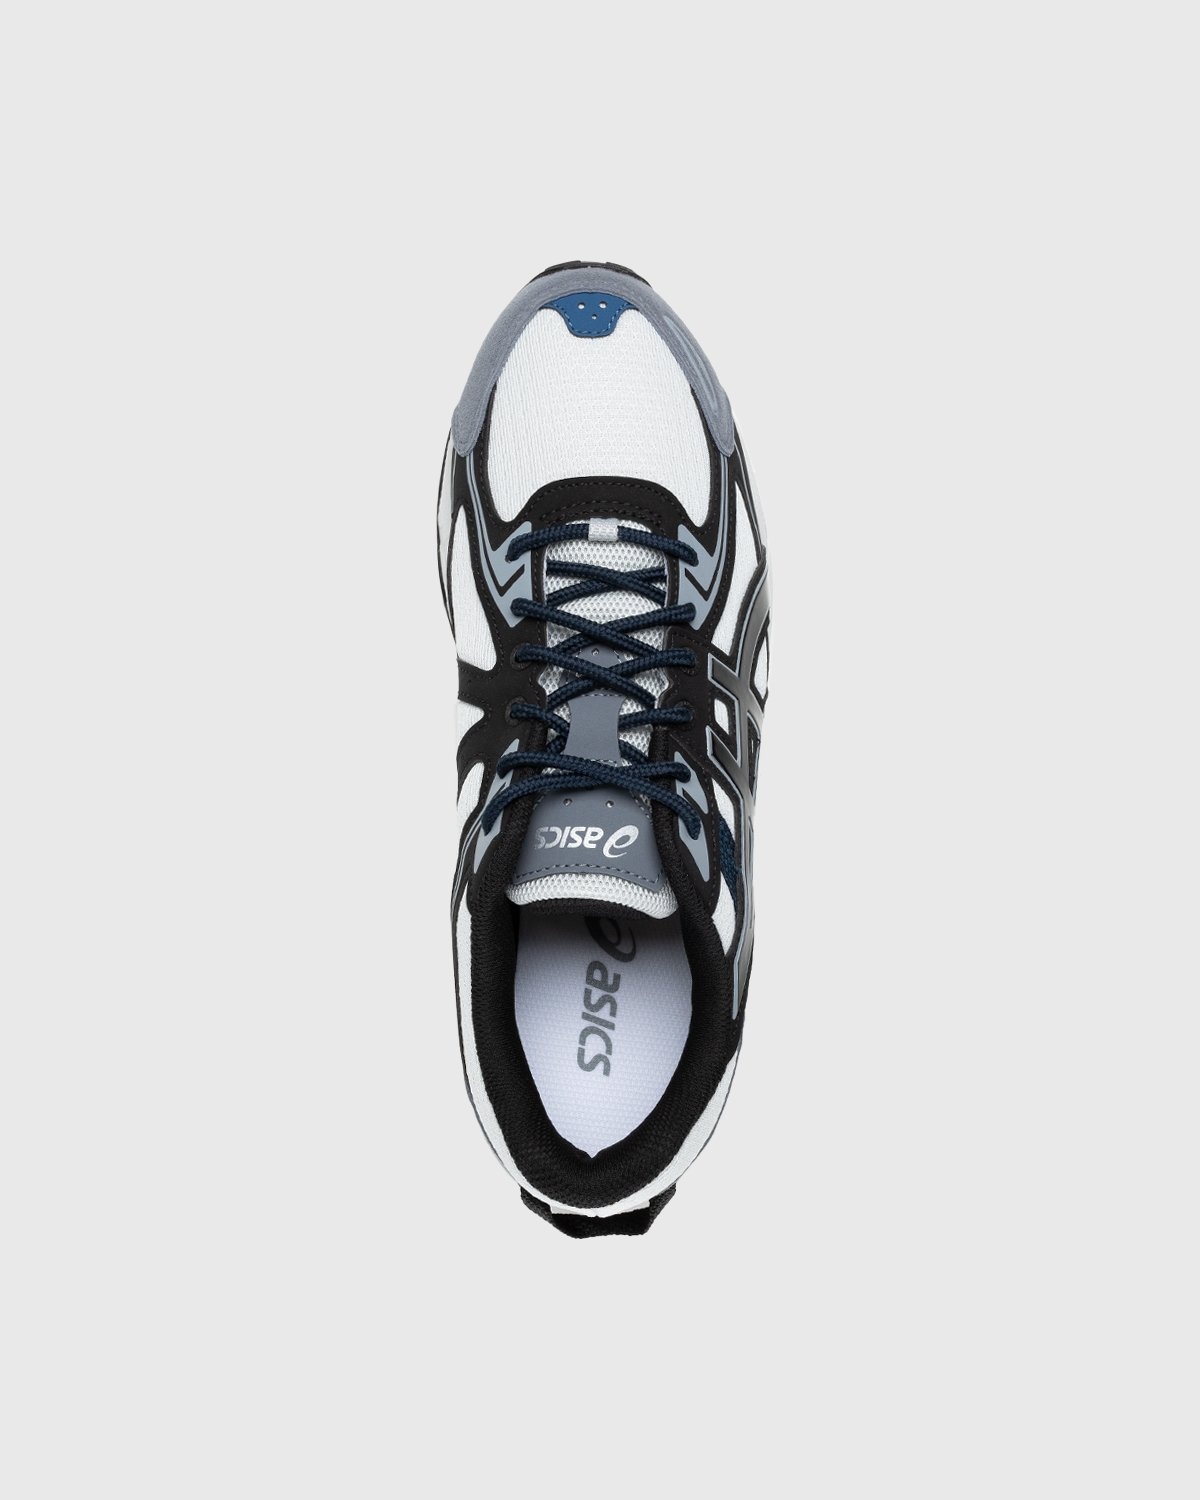 asics – Gel-Venture 6 Glacier Grey Black - Sneakers - Grey - Image 5